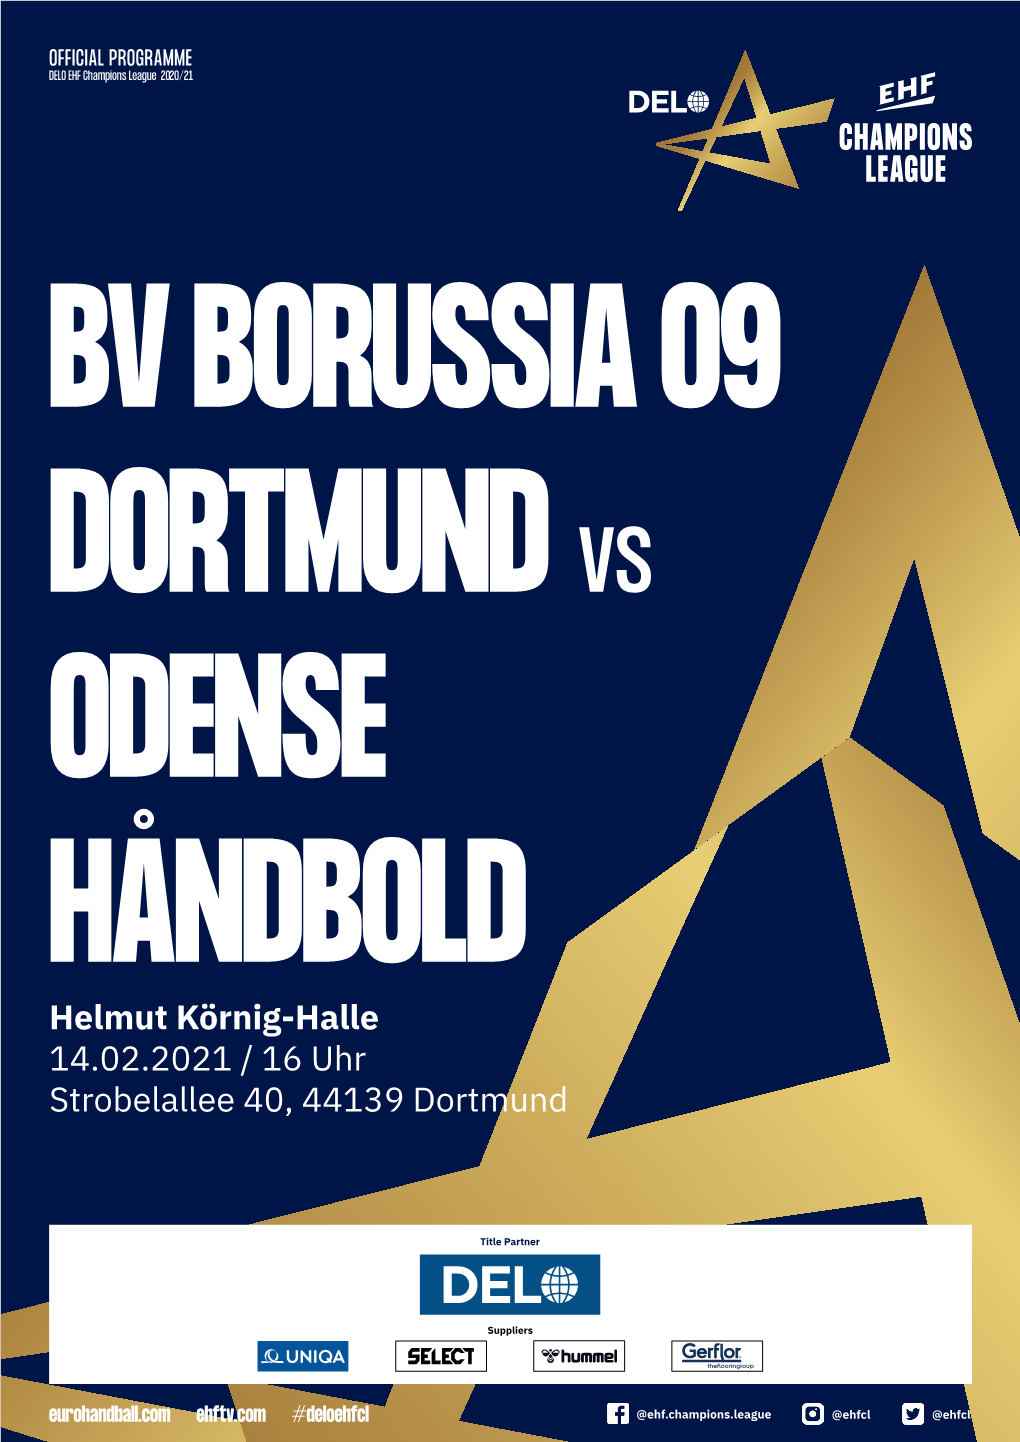 Helmut Körnig-Halle 14.02.2021 / 16 Uhr Strobelallee 40, 44139 Dortmund